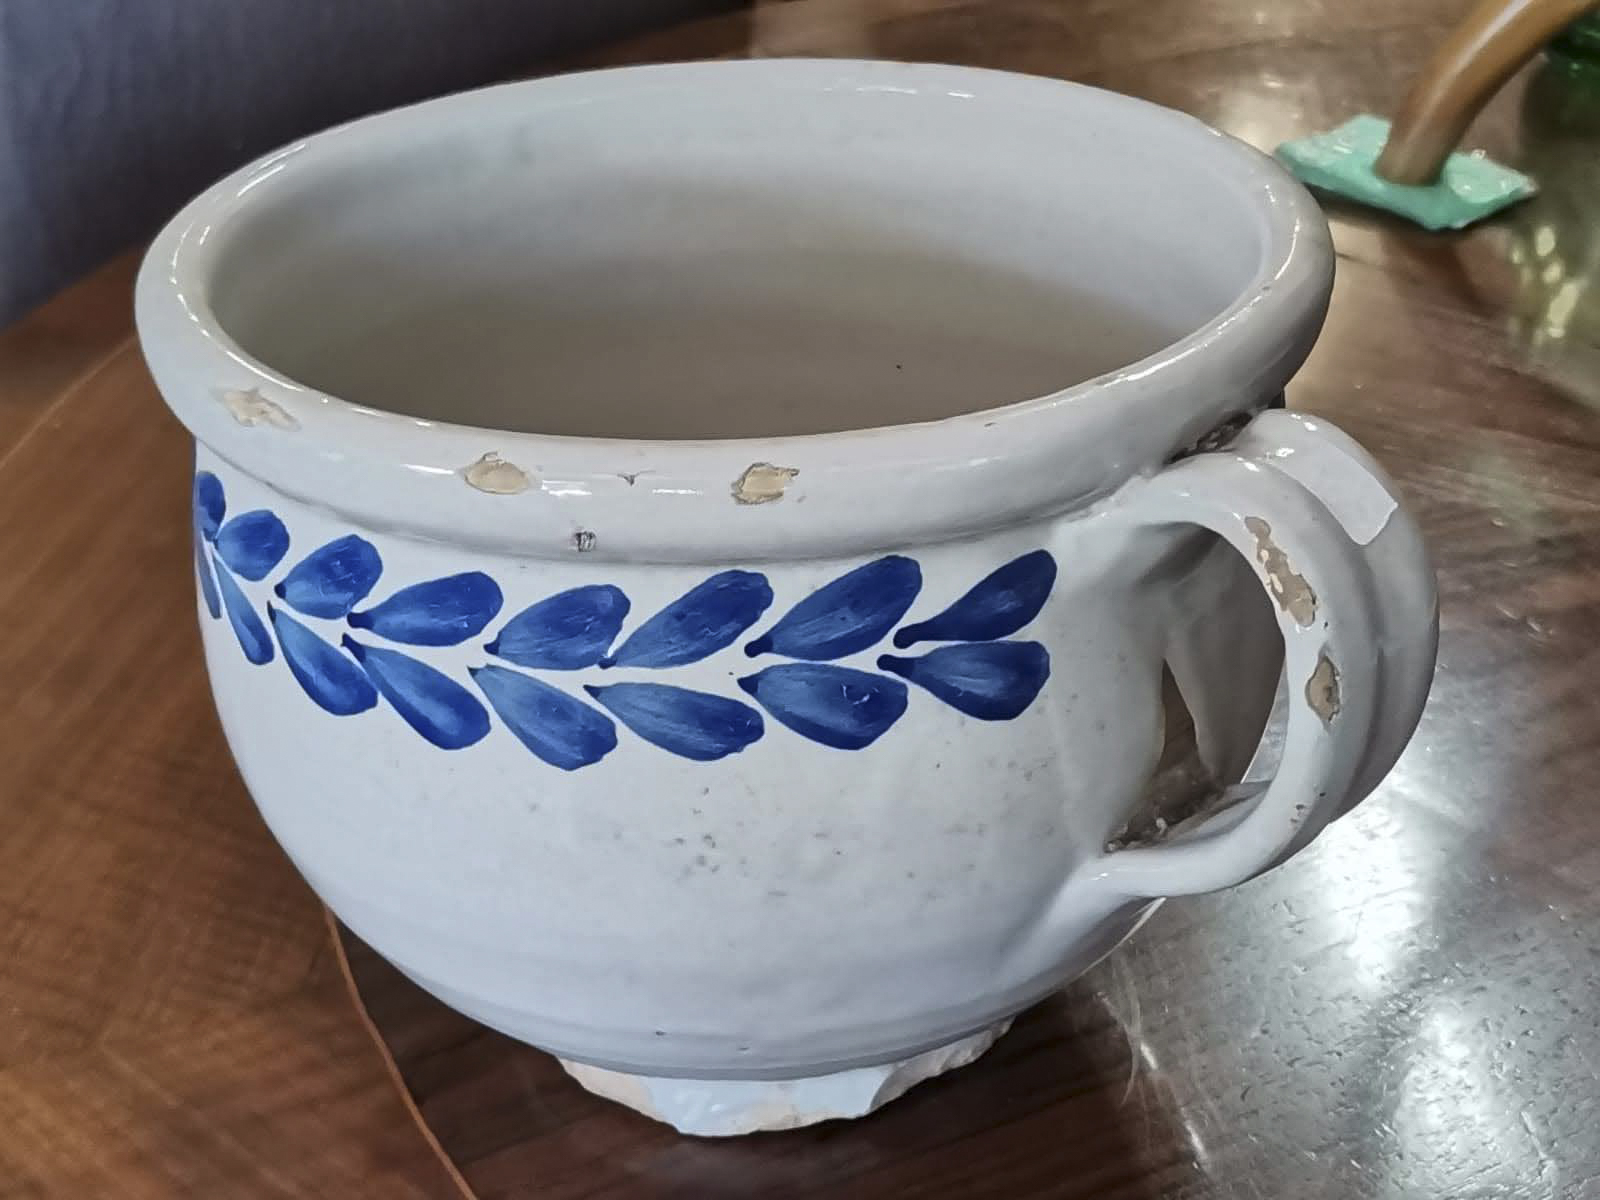 Vendita online vaso da notte in terracotta smaltata bianco e blu